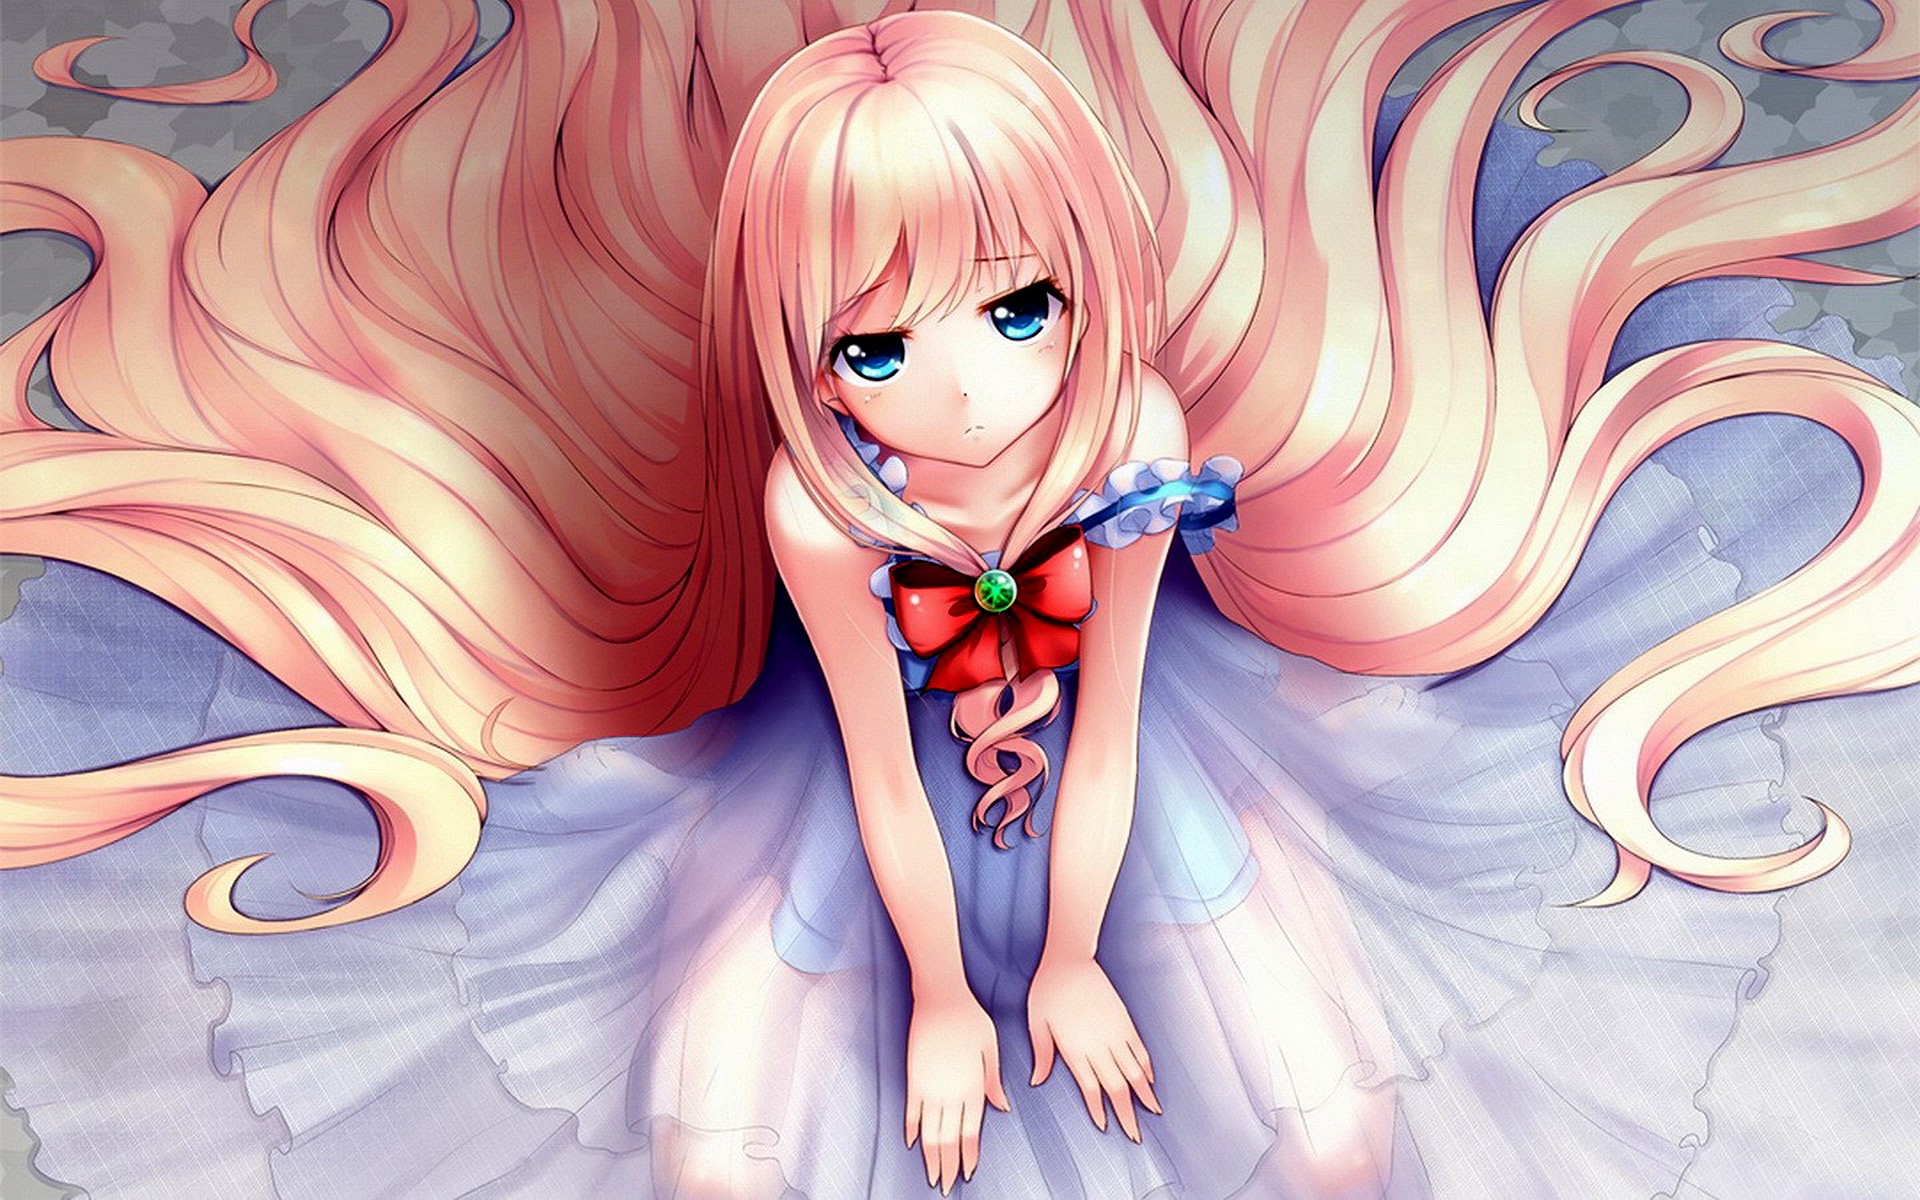 Wallpaper - Anime Girl With Long Blond Hair - HD Wallpaper 